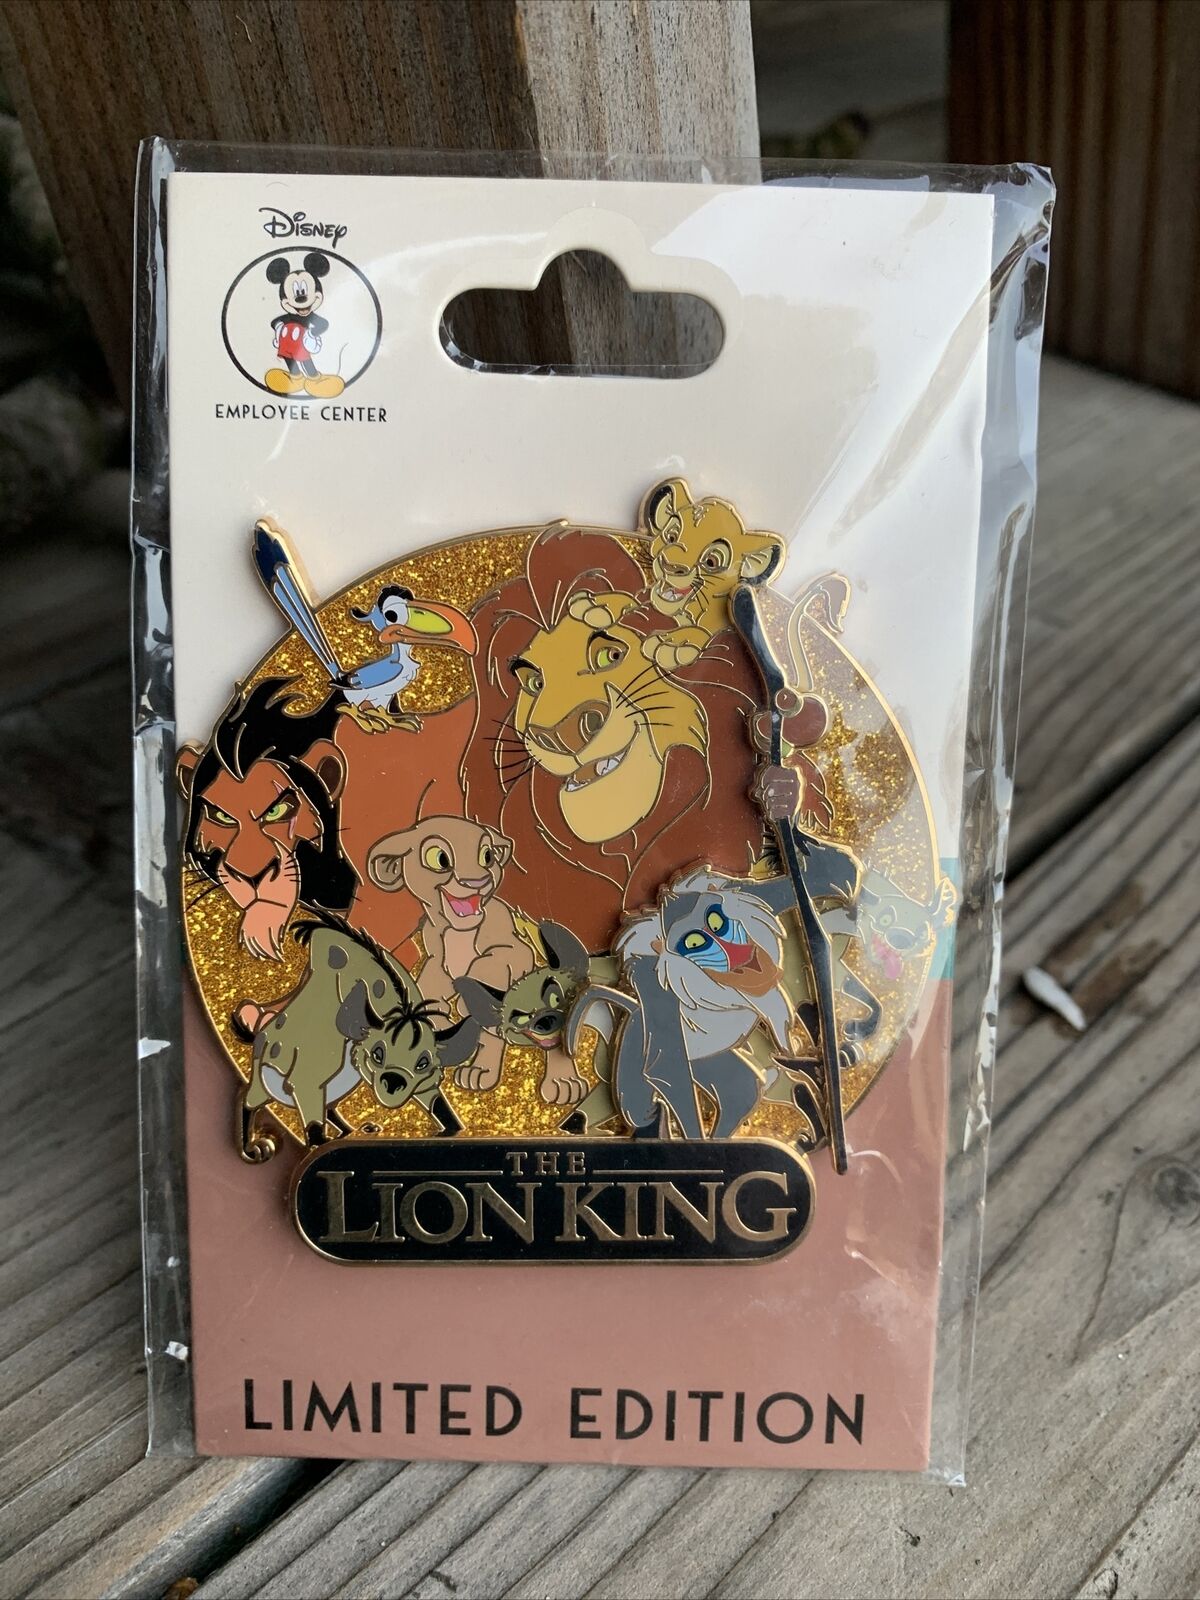 Limited Edition Disney Employee Center Lion King Pin Jumbo Pin Original Card